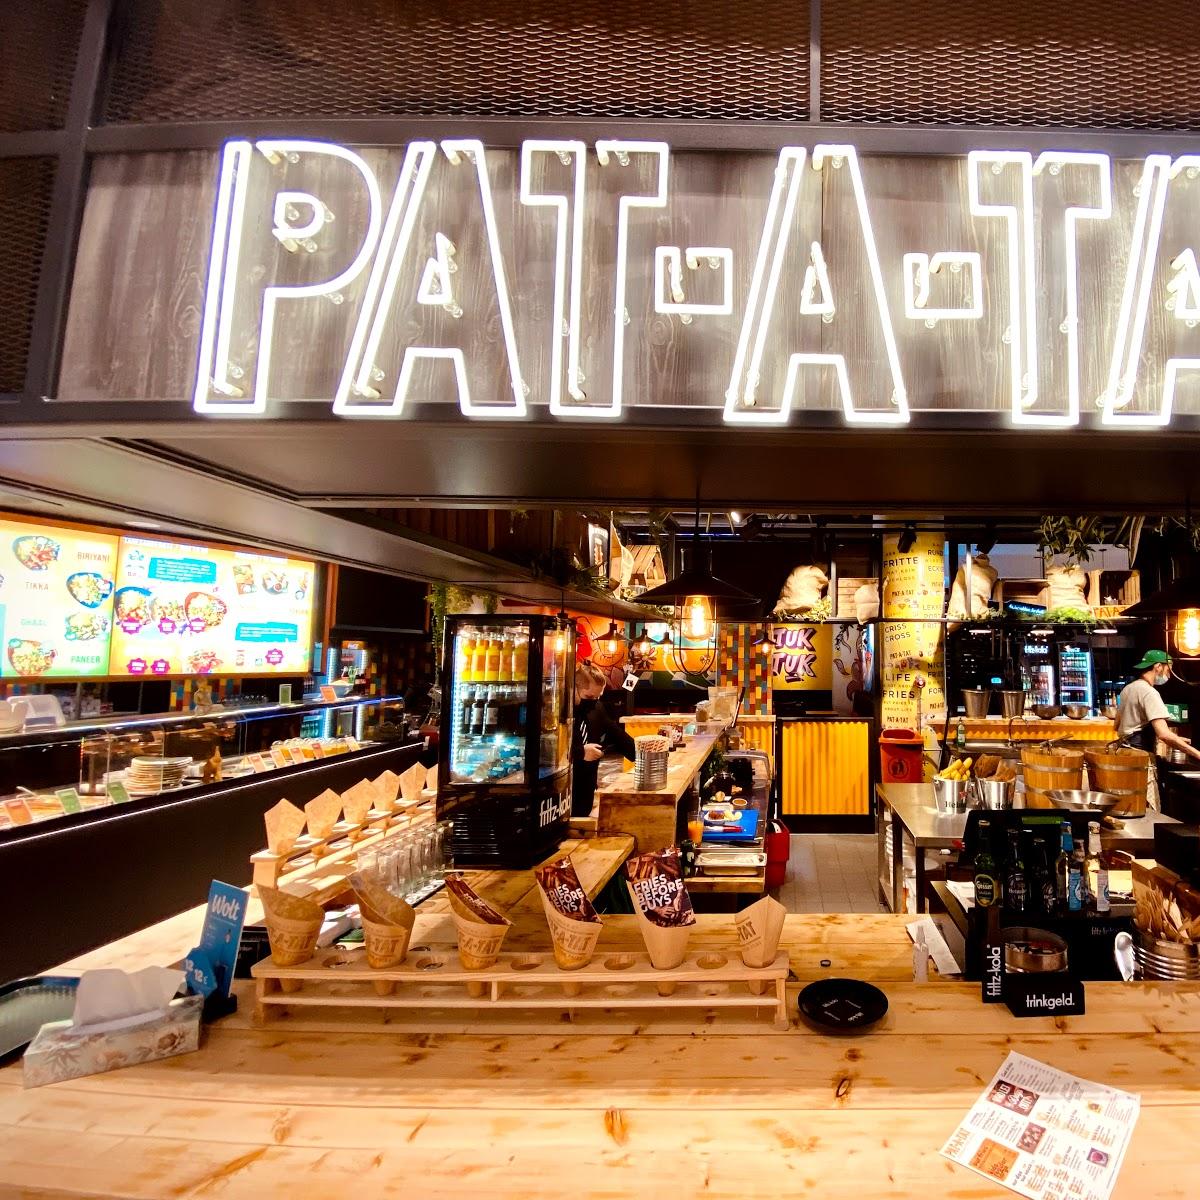 Restaurant "Pat-A-Tat" in Berlin